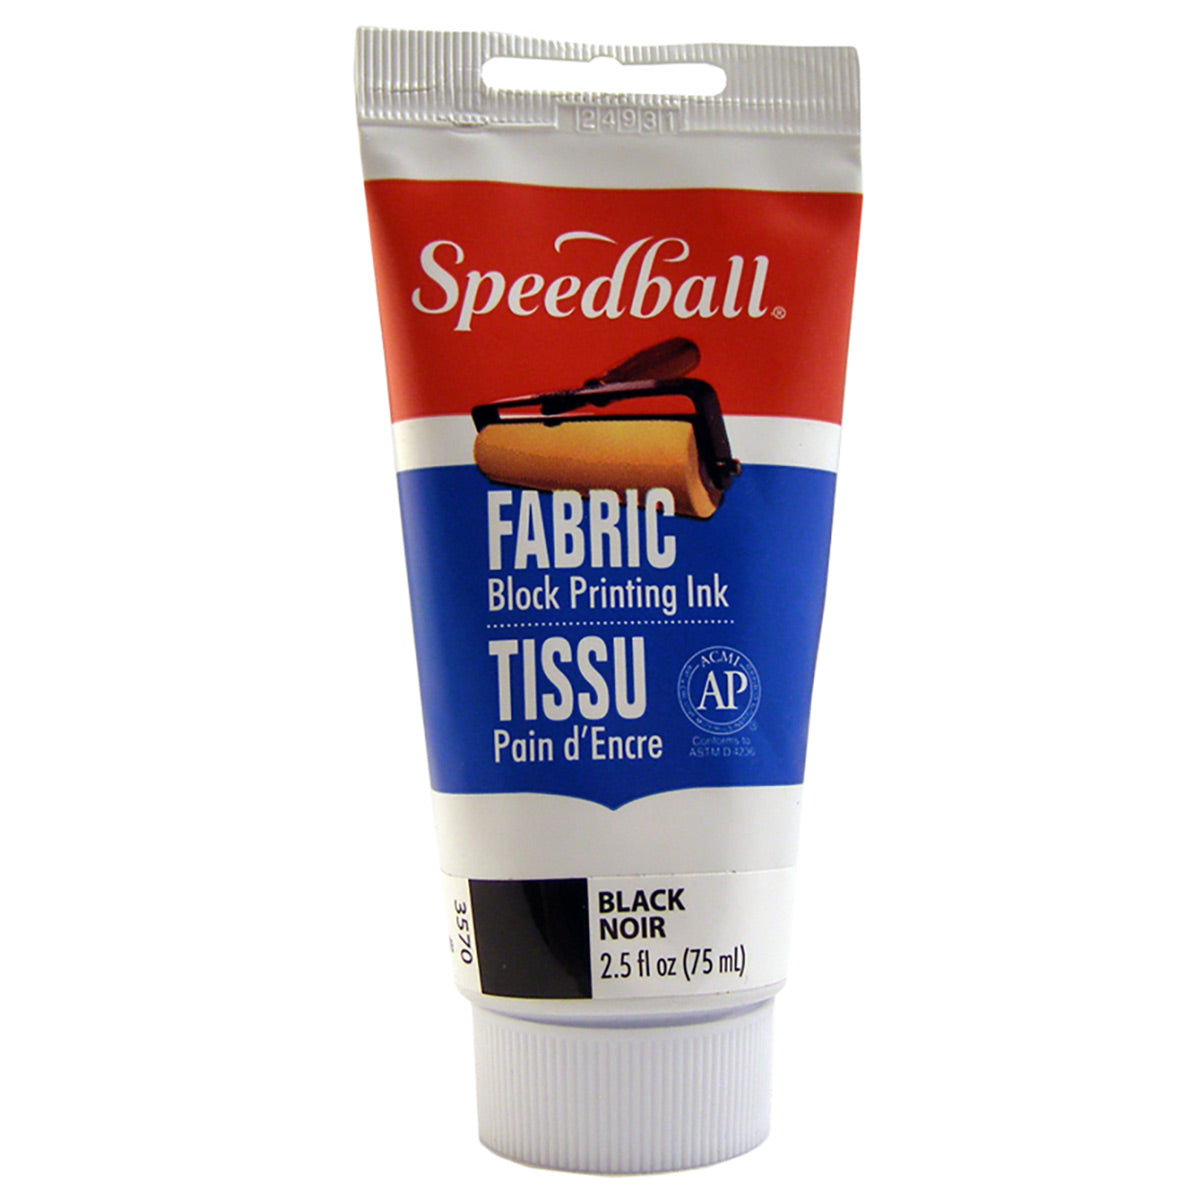 Speedball - Fabric Block Printing Ink 75ml (2.5oz) - Black